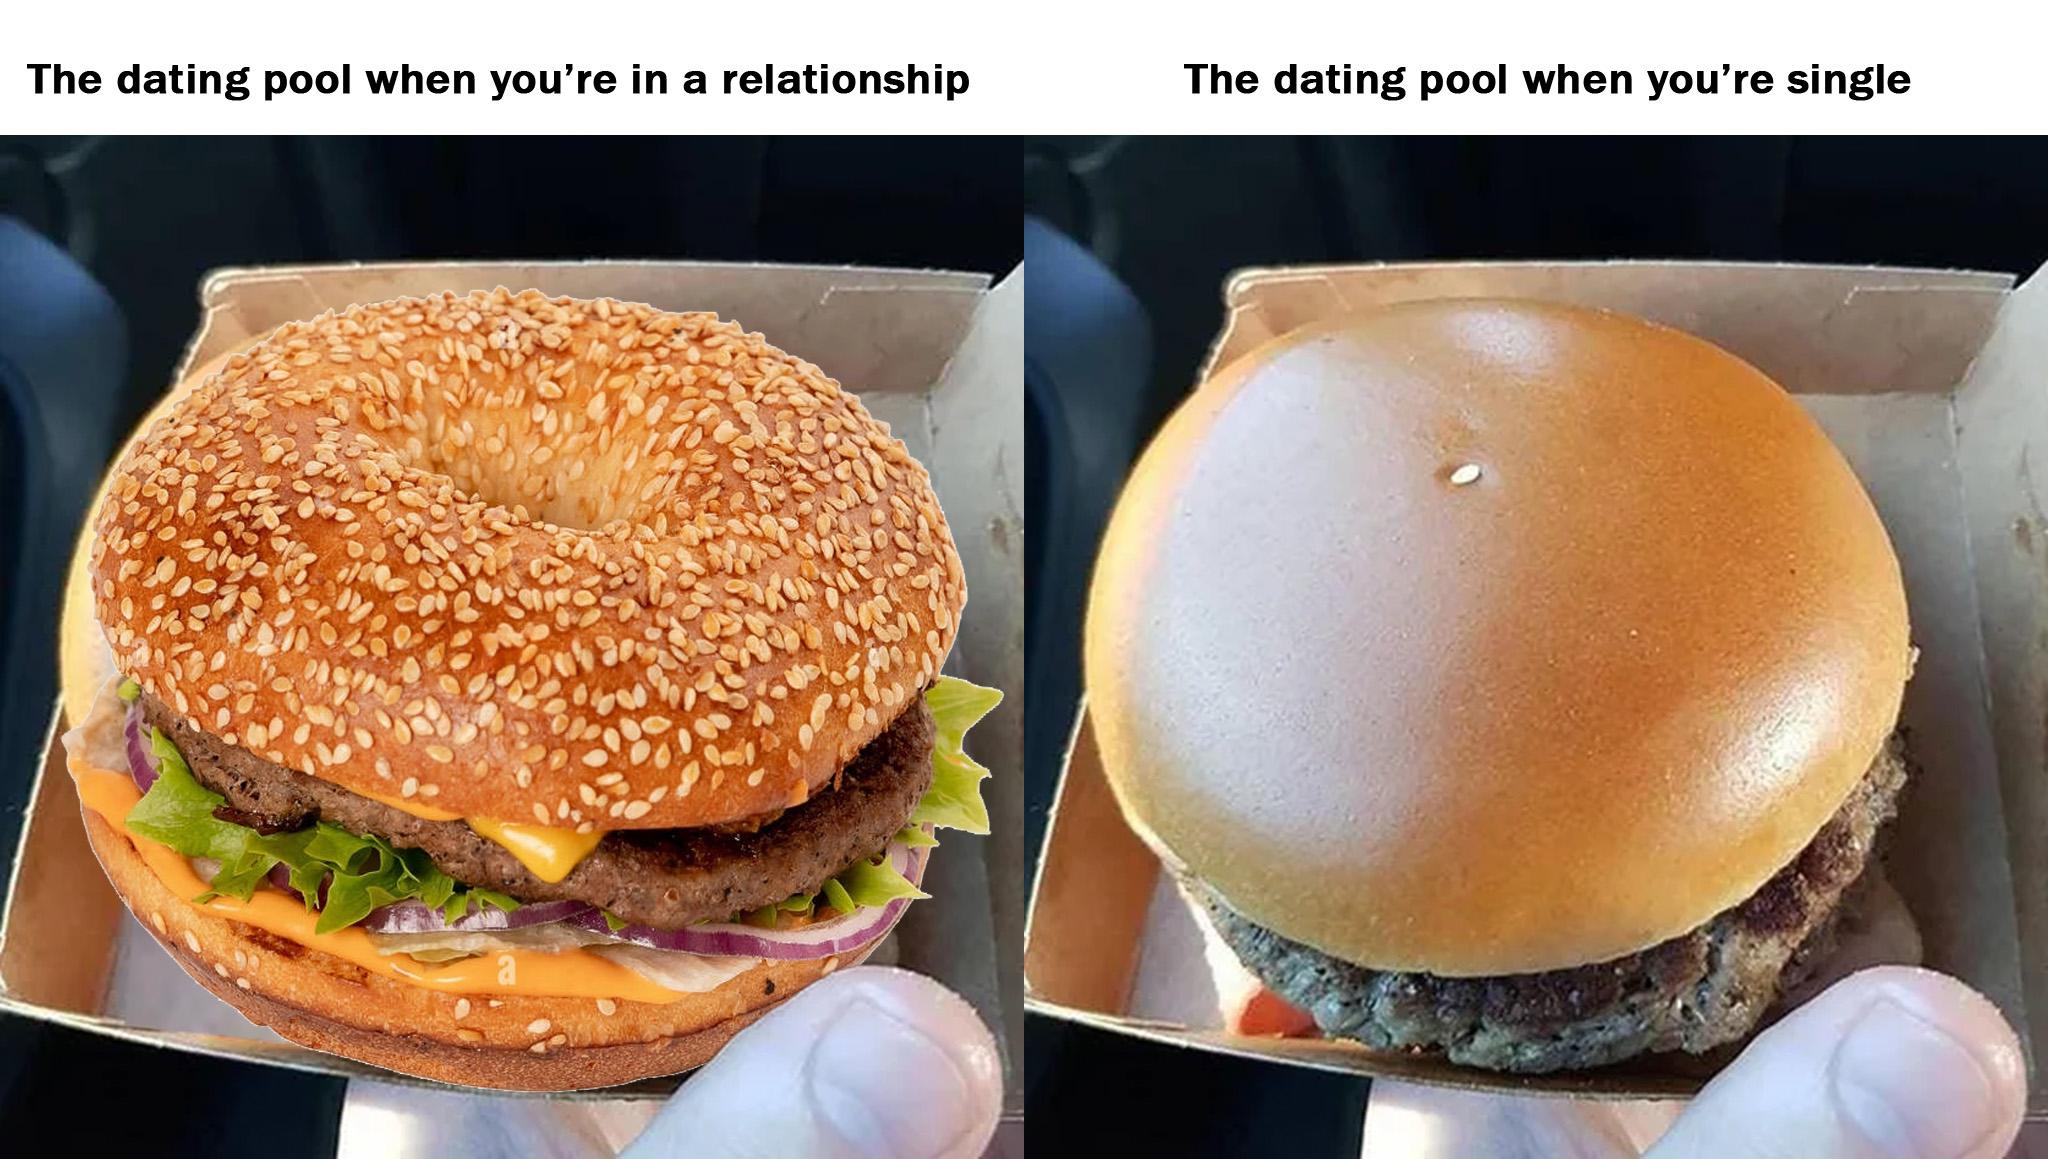 dank memes - veggie burger - The dating pool when you're in a relationship The dating pool when you're single